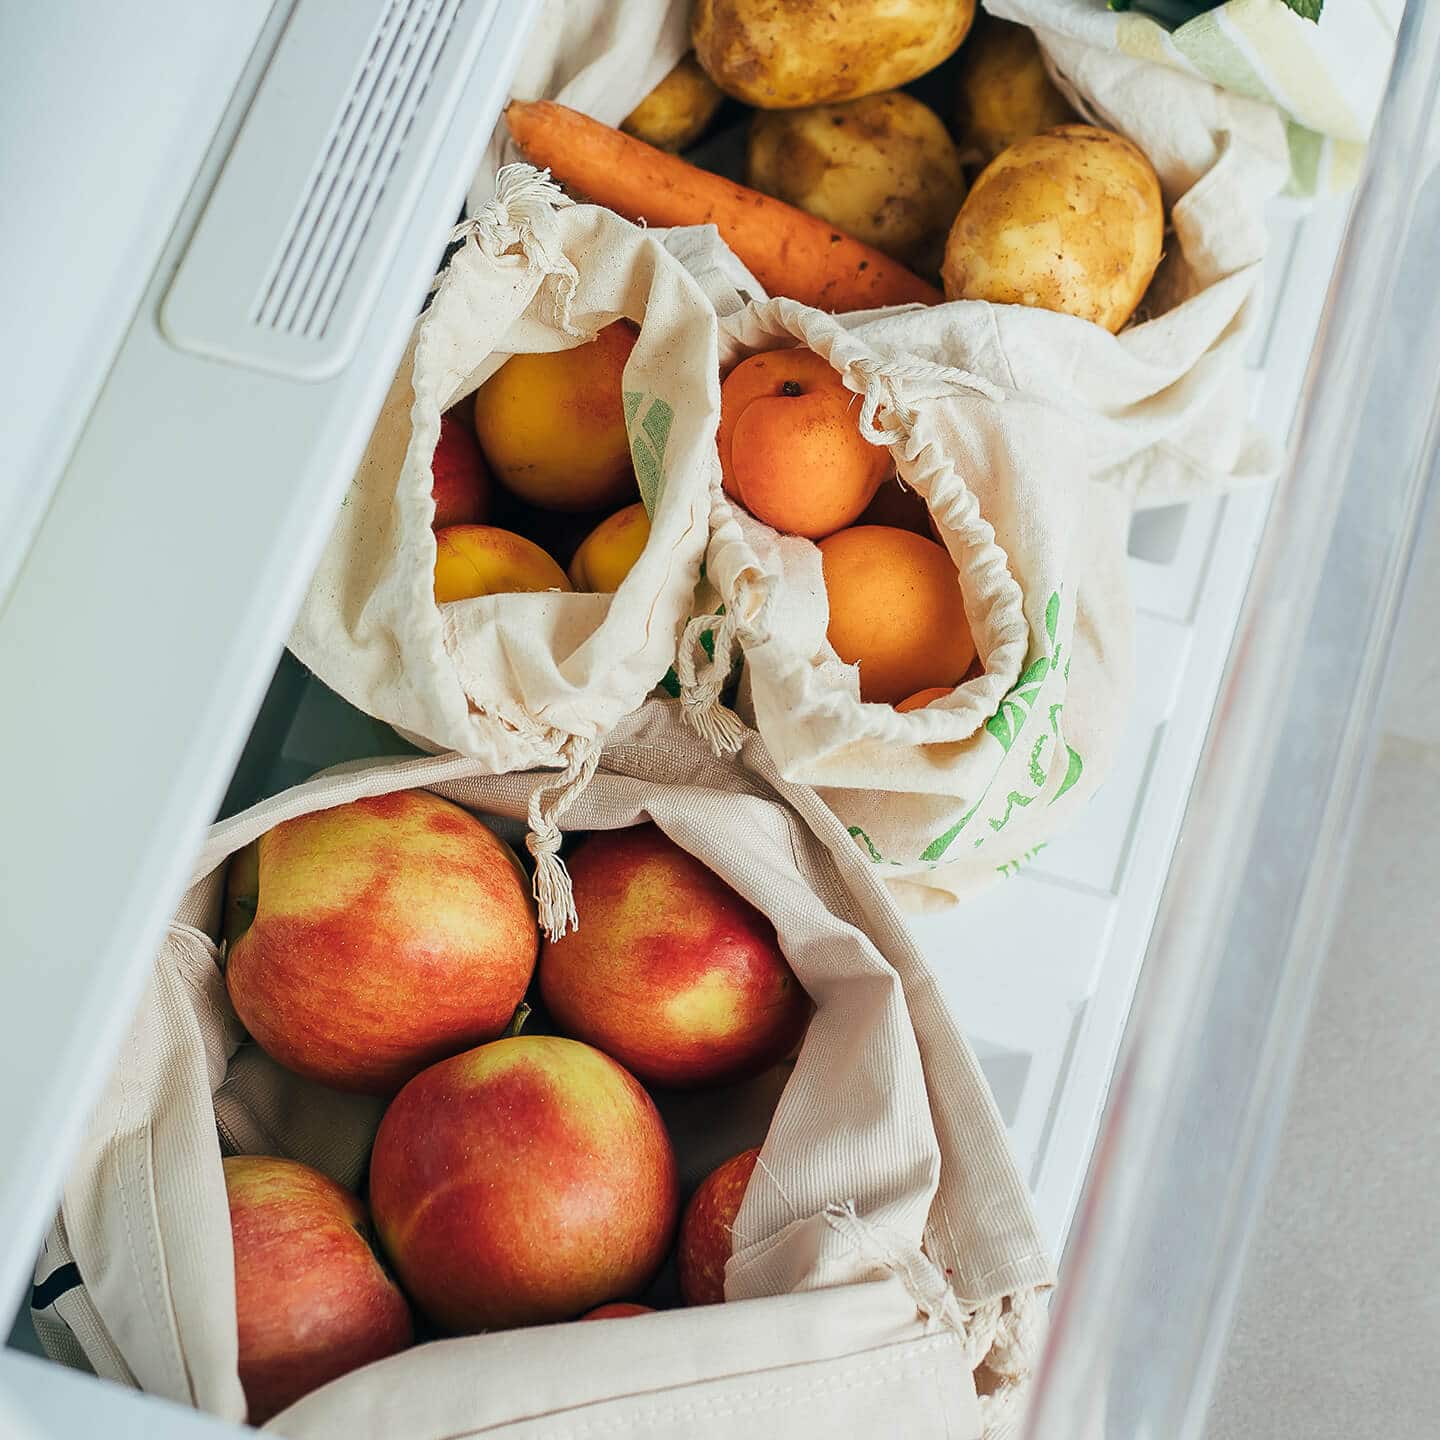 how-to-store-food_slider-2_fruits-vegetables_card-2.jpg